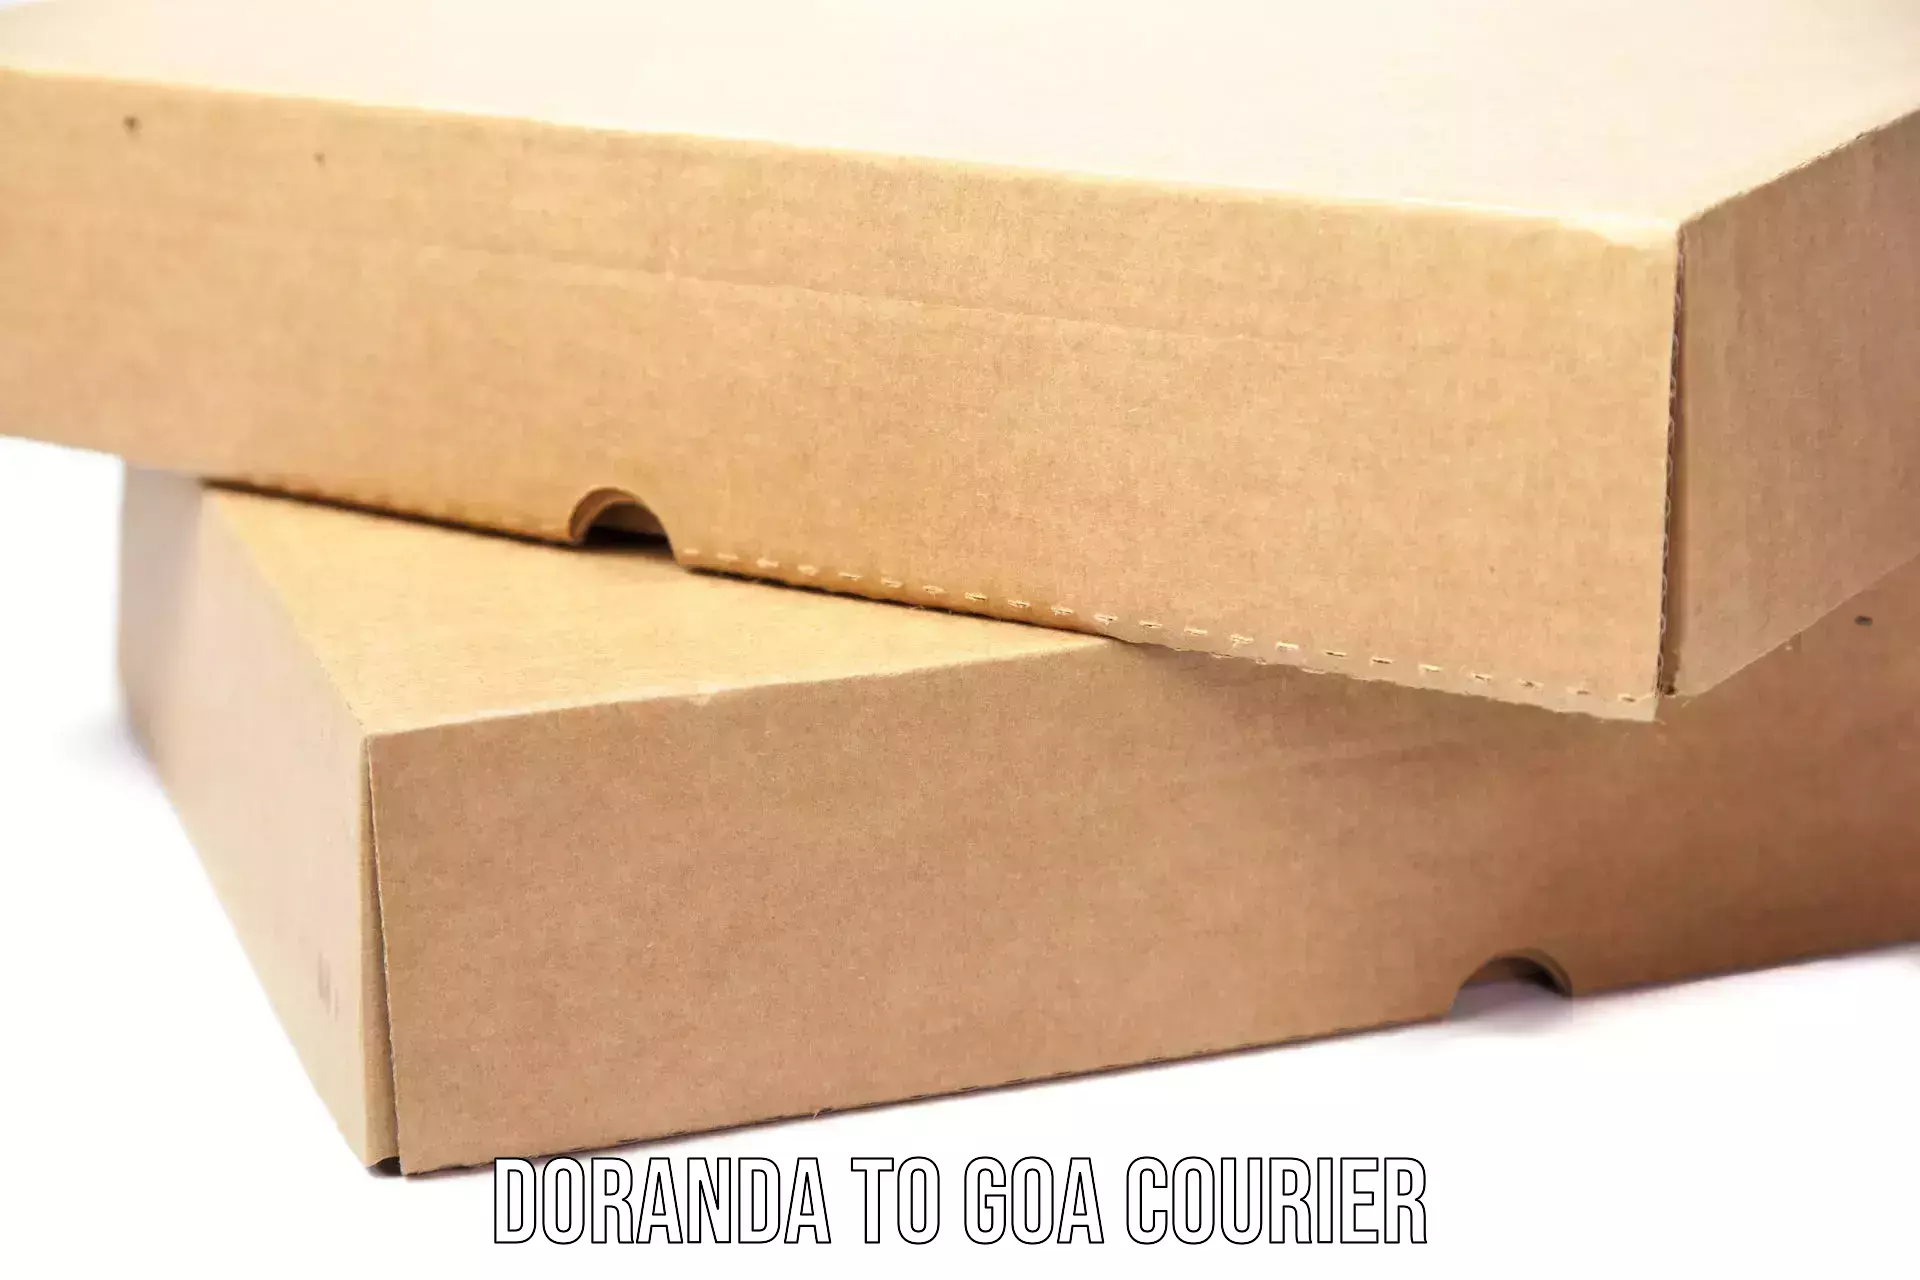 Courier service comparison Doranda to Vasco da Gama